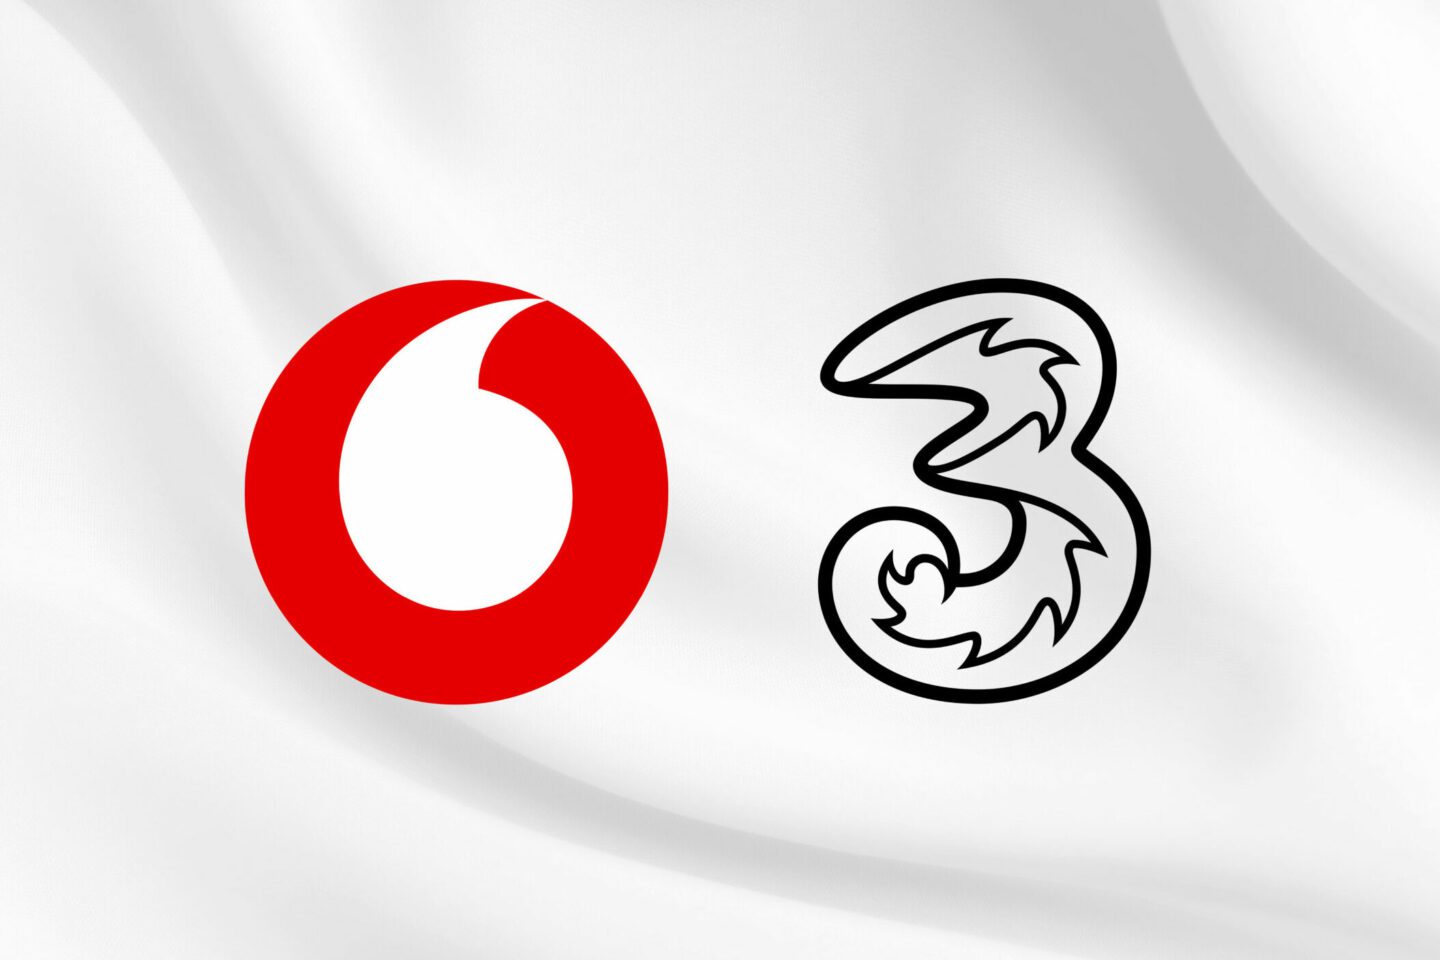 Vodafone and Three Merger